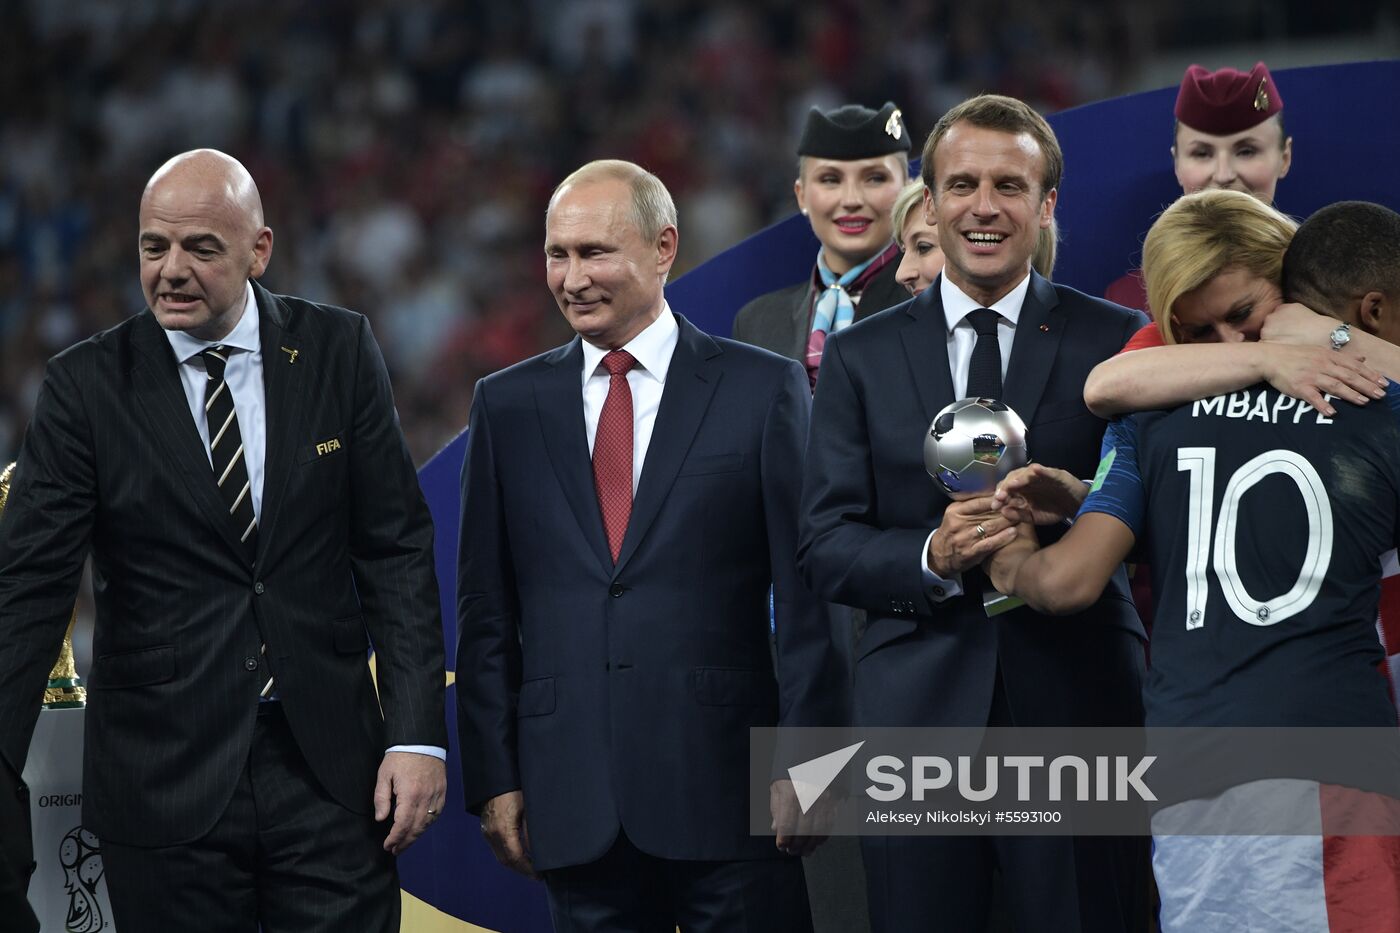 2018 World Cup award ceremony